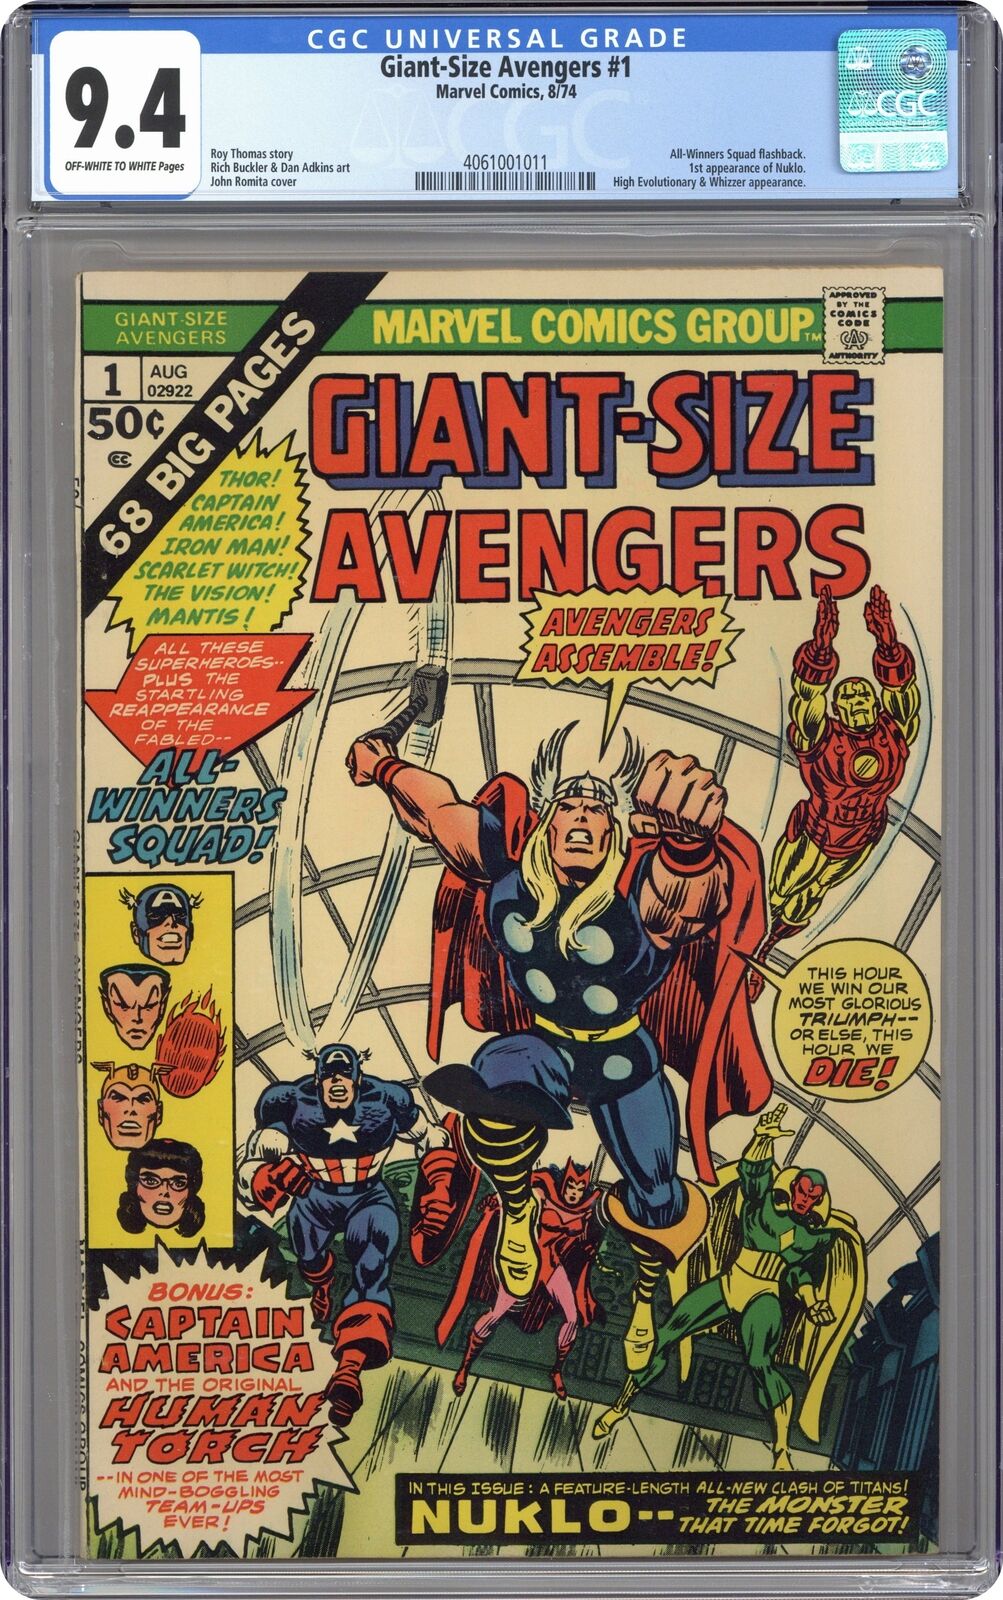 Giant Size Avengers #1 CGC 9.4 1974 4061001011